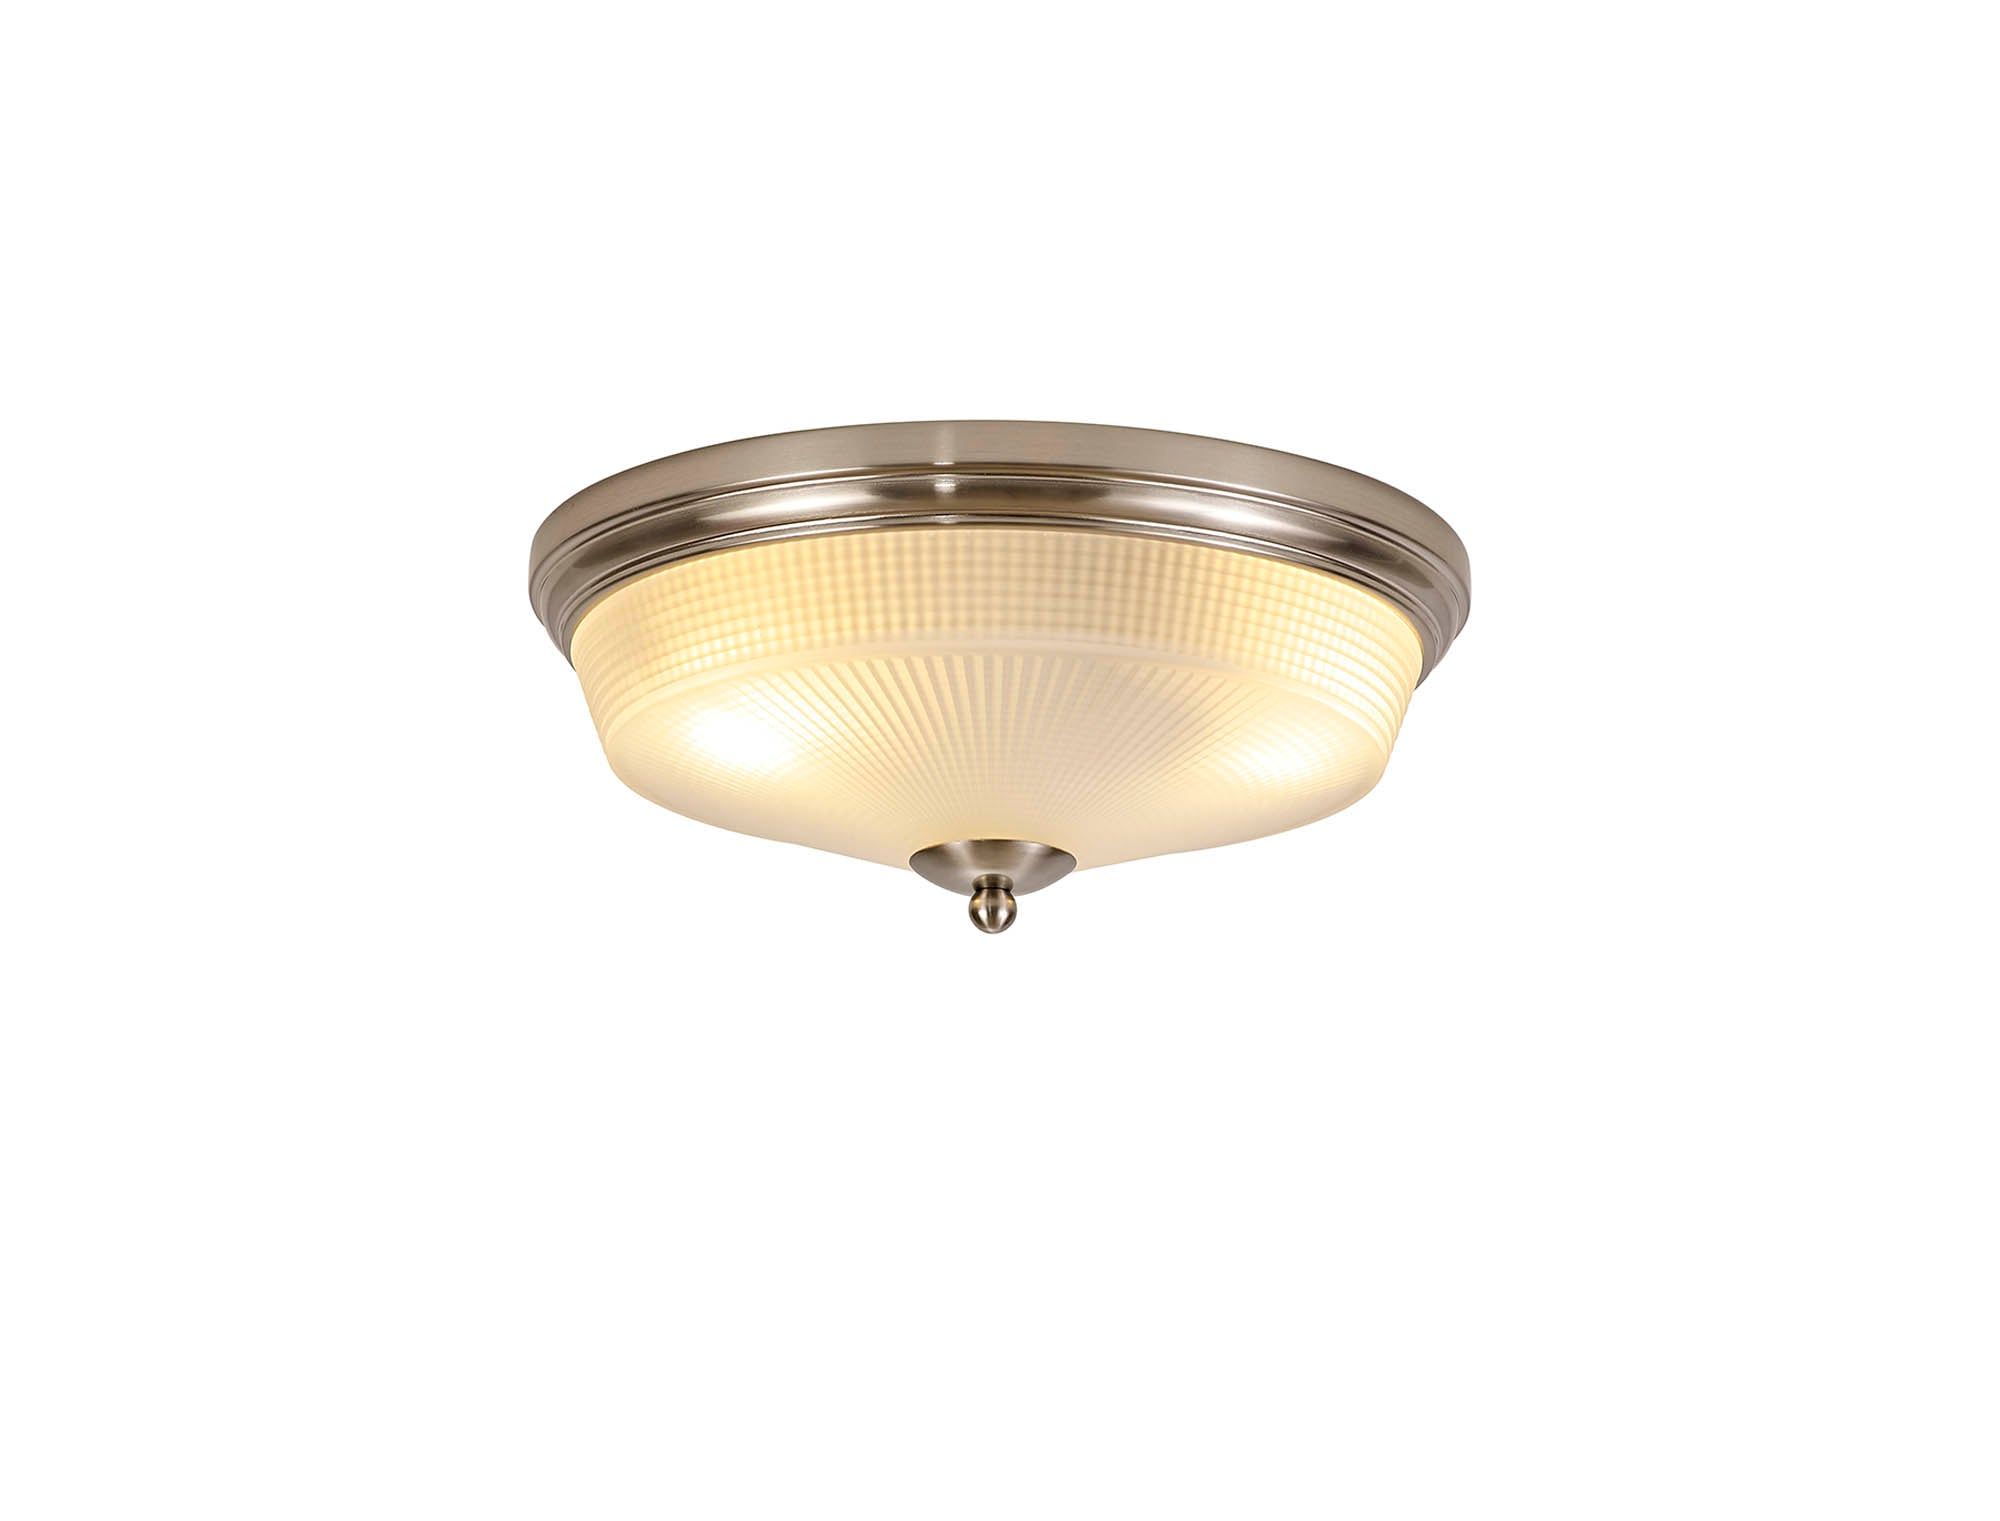 Shelbourne 2 Light E27 Flush Ceiling Light, Satin Nickel / Prismatic Glass